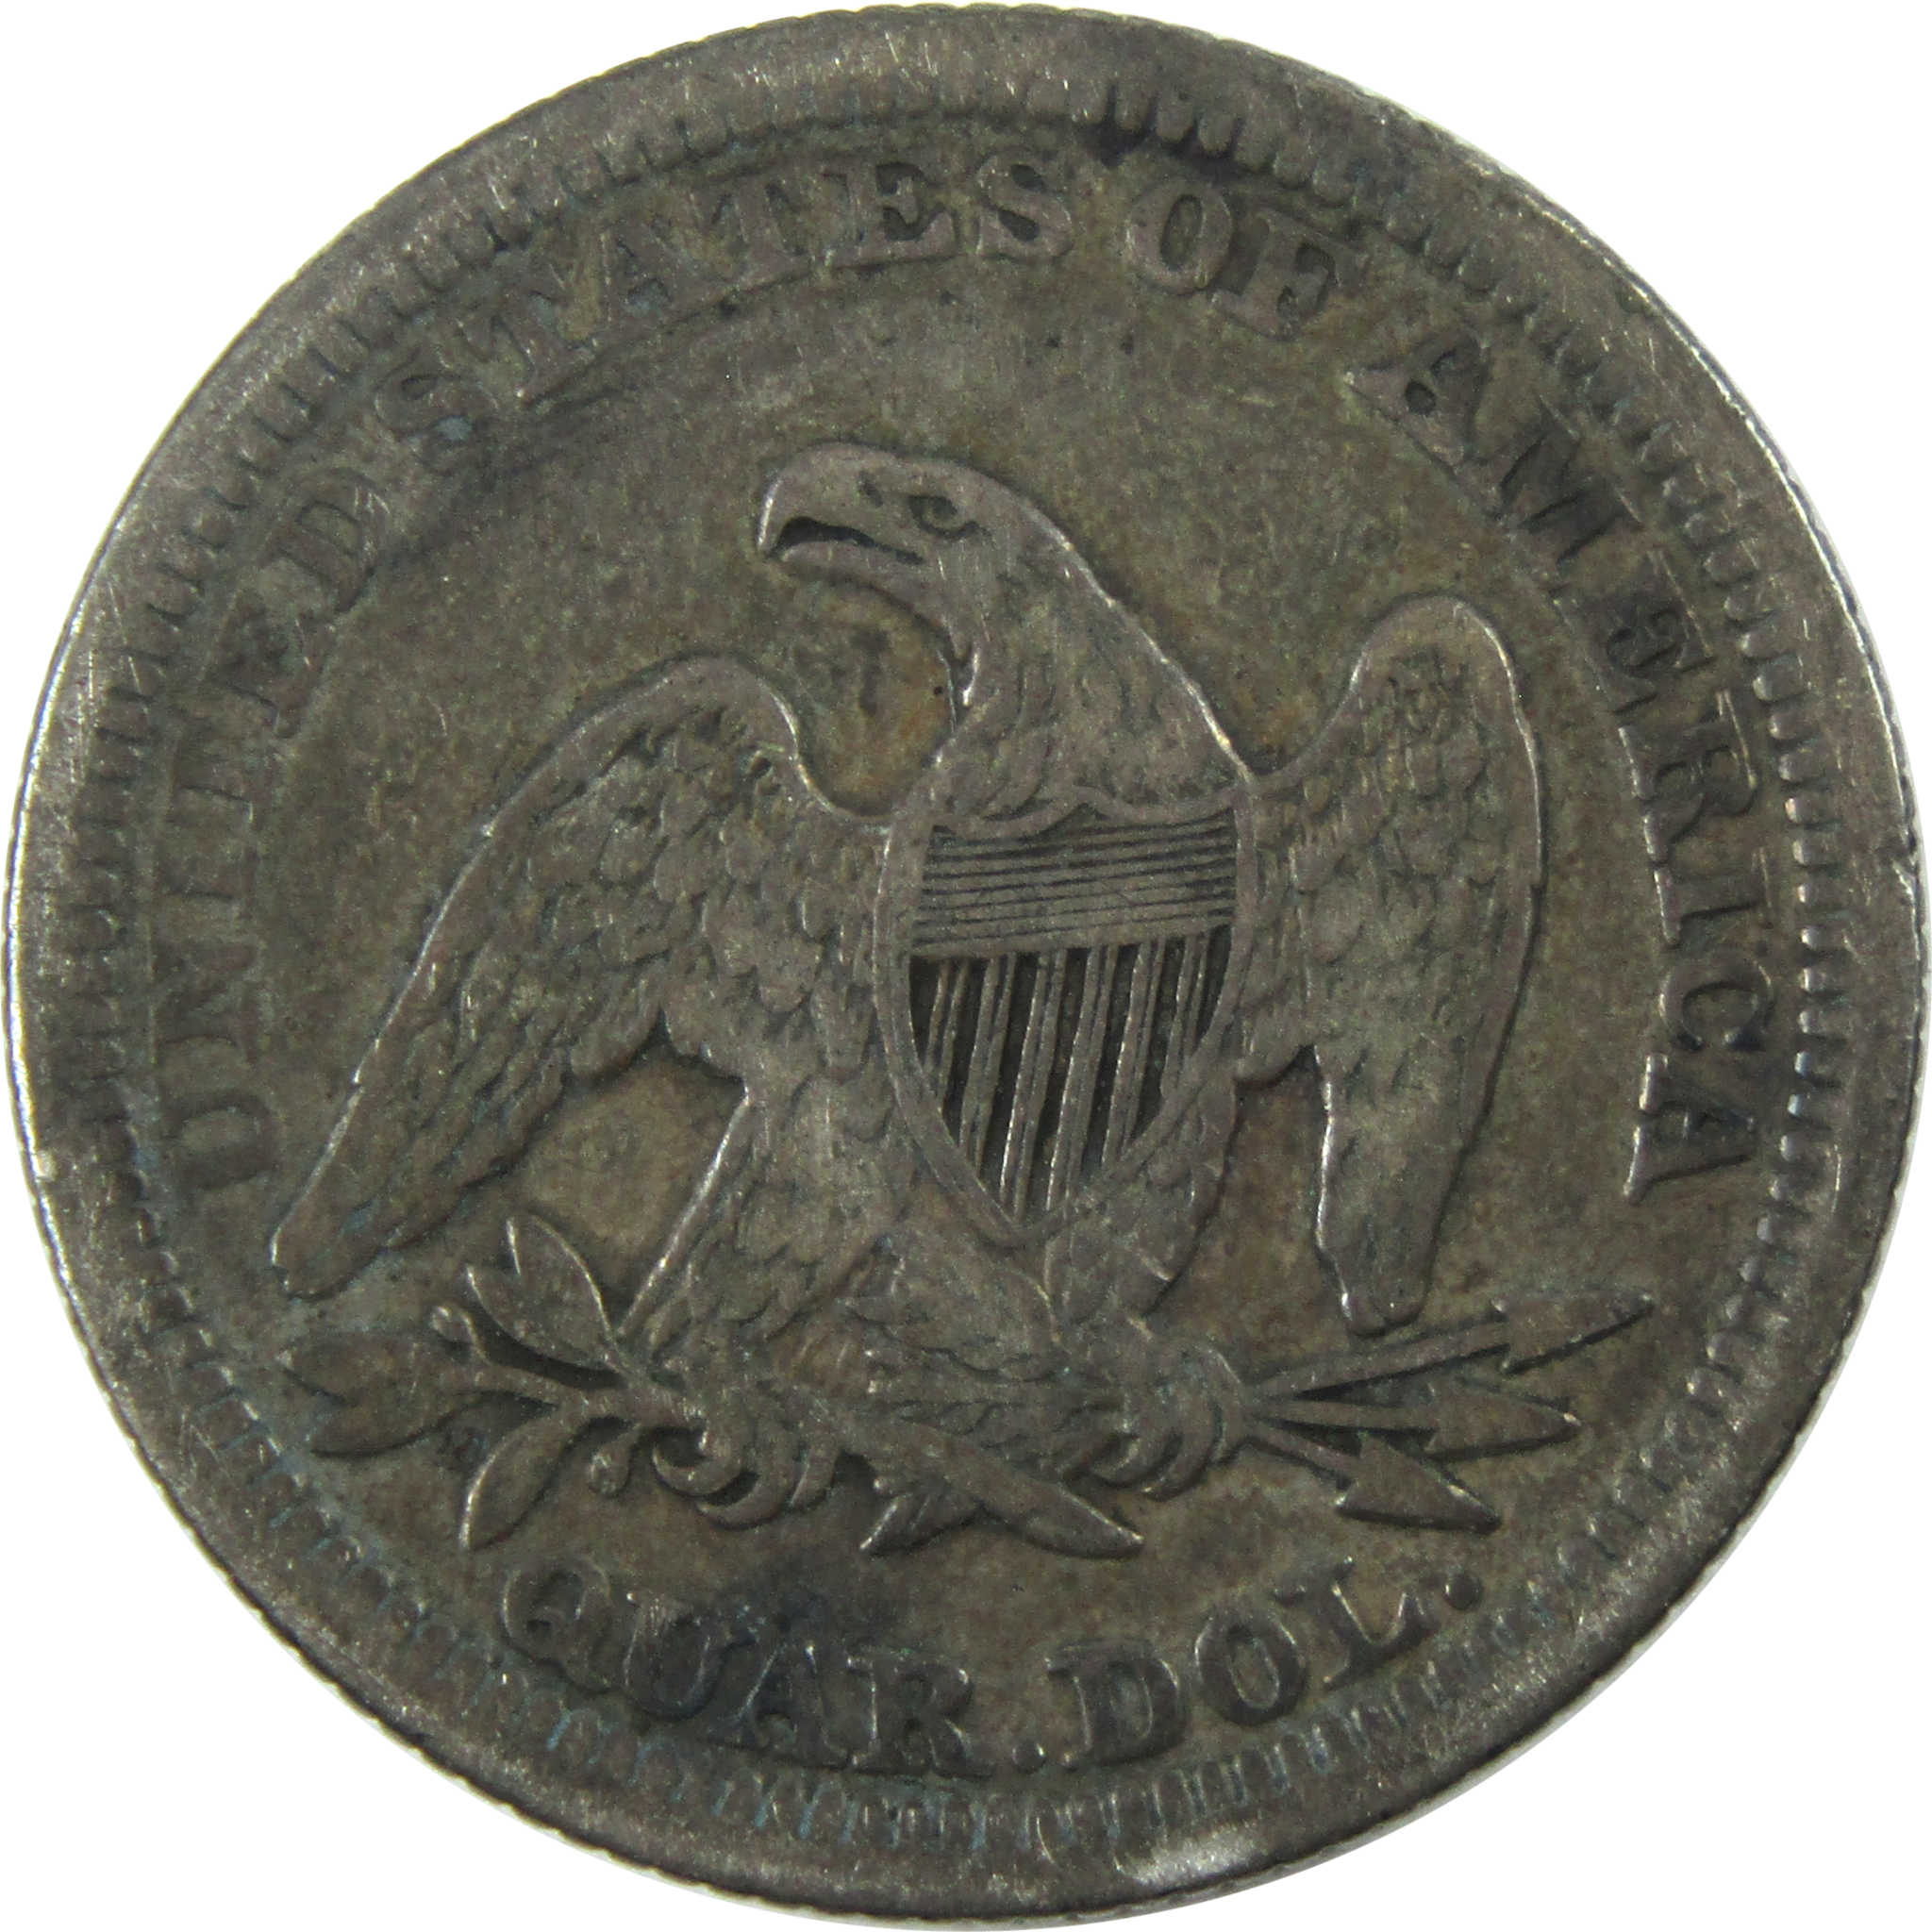 1854 Seated Liberty Quarter VF Very Fine Silver 25c Coin SKU:I13328